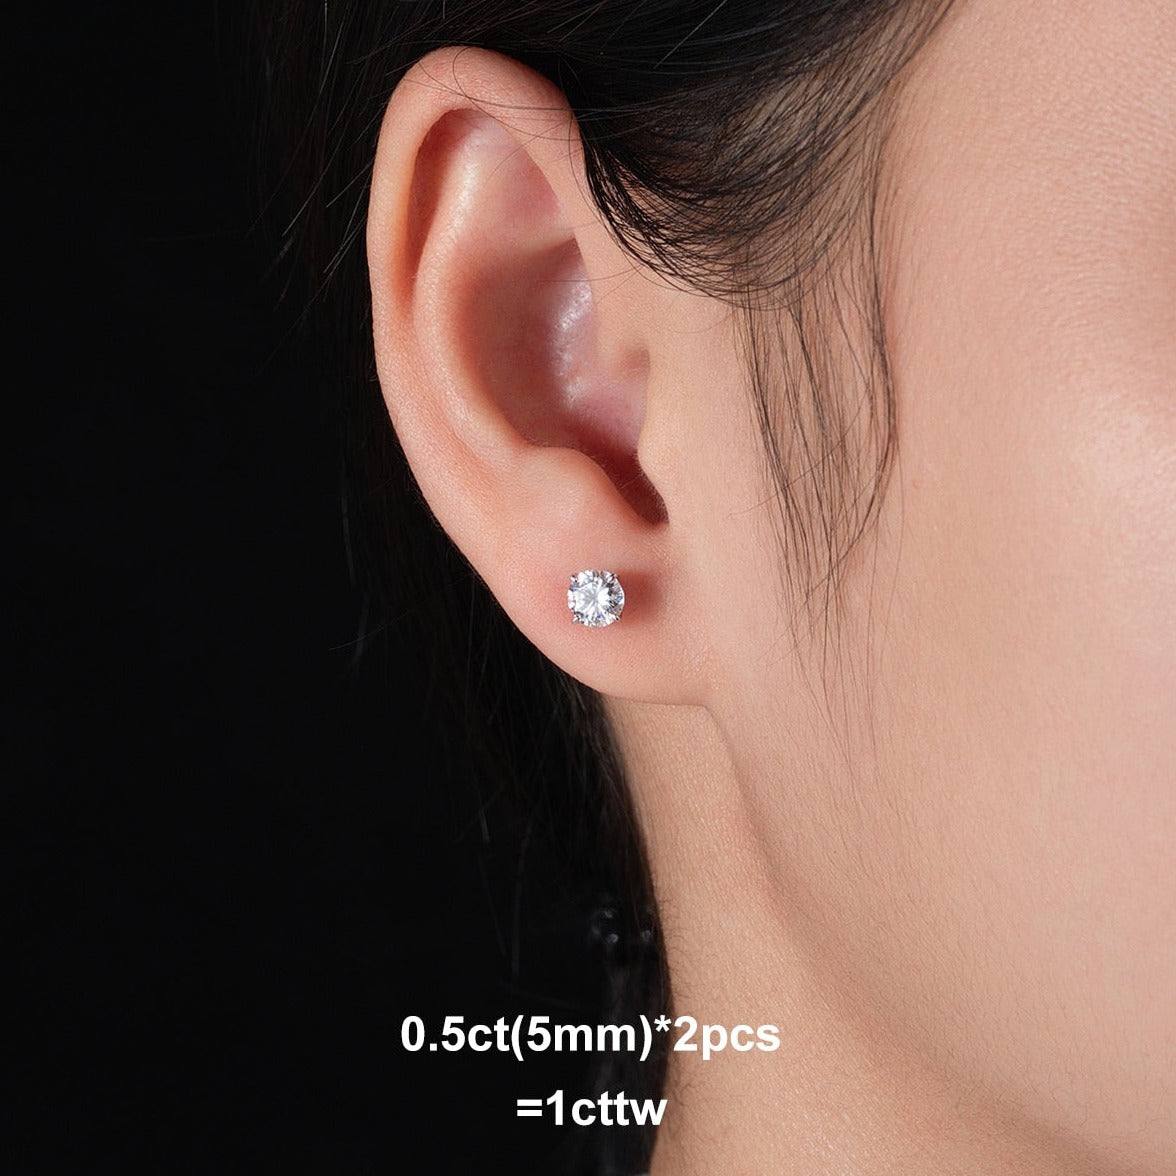 Gold Moissanite Stud Earrings. 1.0 to 4.0 Carat. DVVS1. Certified.